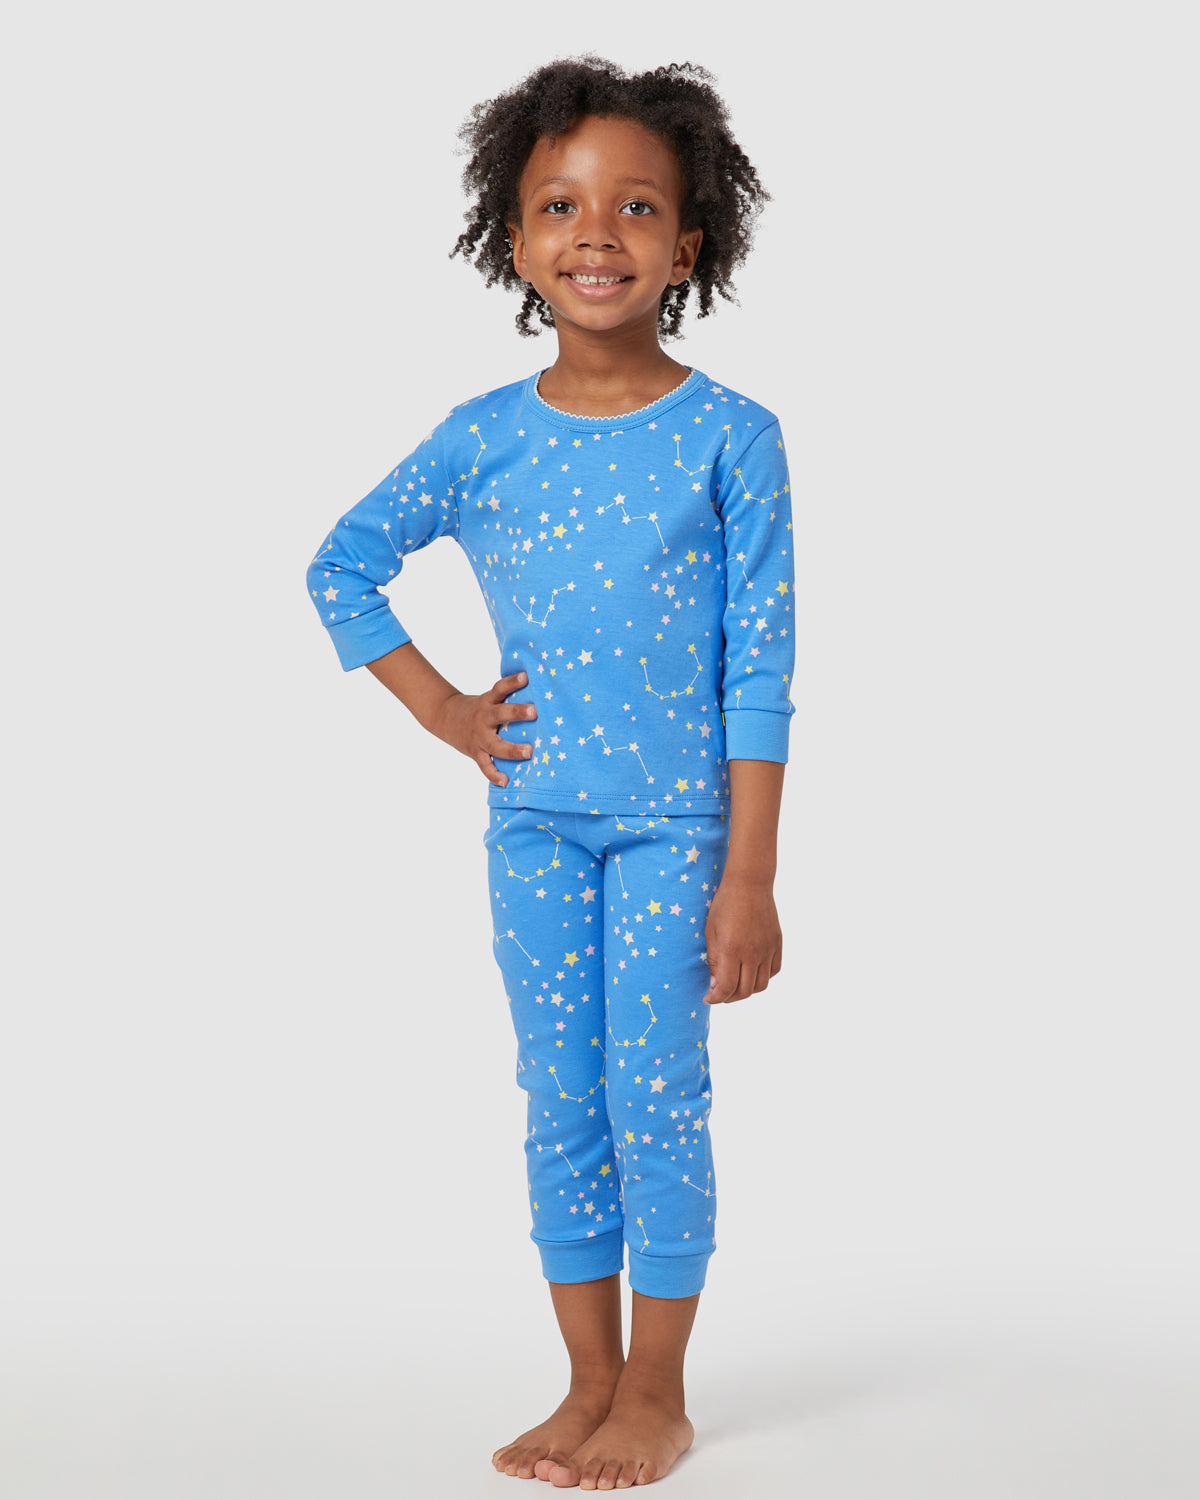 Cozyland pajamas - the cozy way through the winter – Sneakscorner